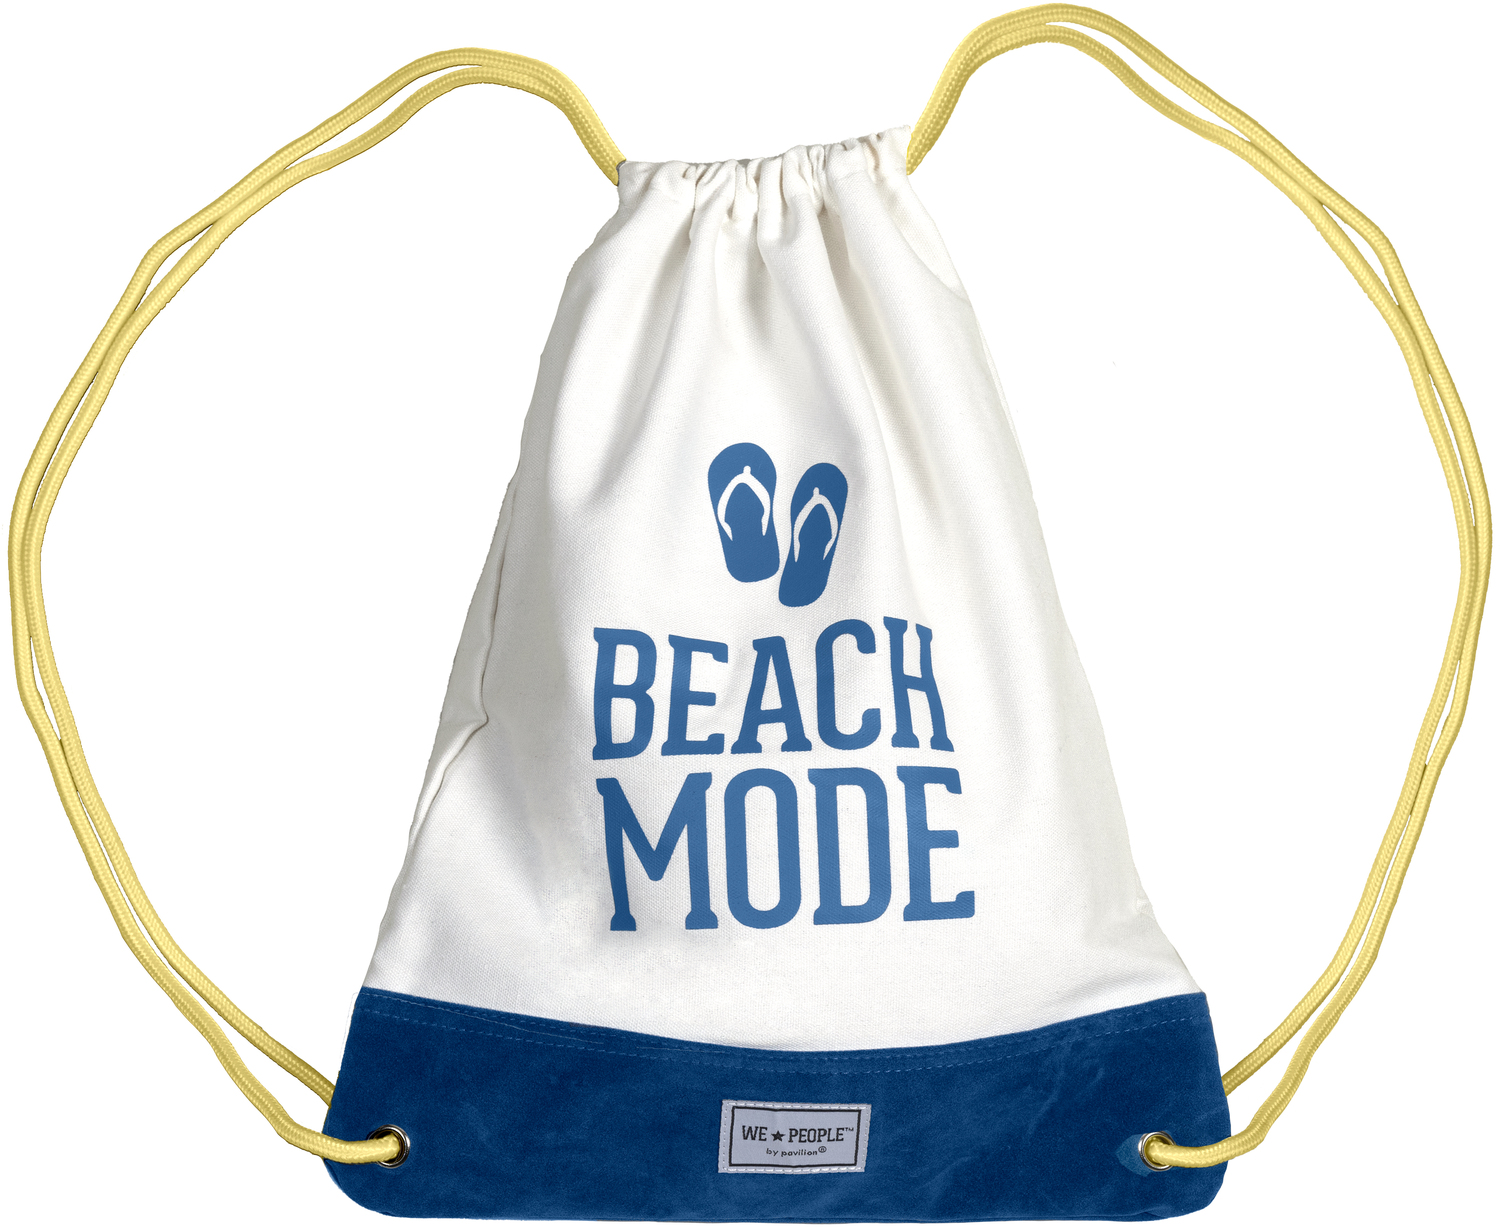 Beach Mode by We People - Beach Mode - 13" x 17" Canvas Drawstring Bag